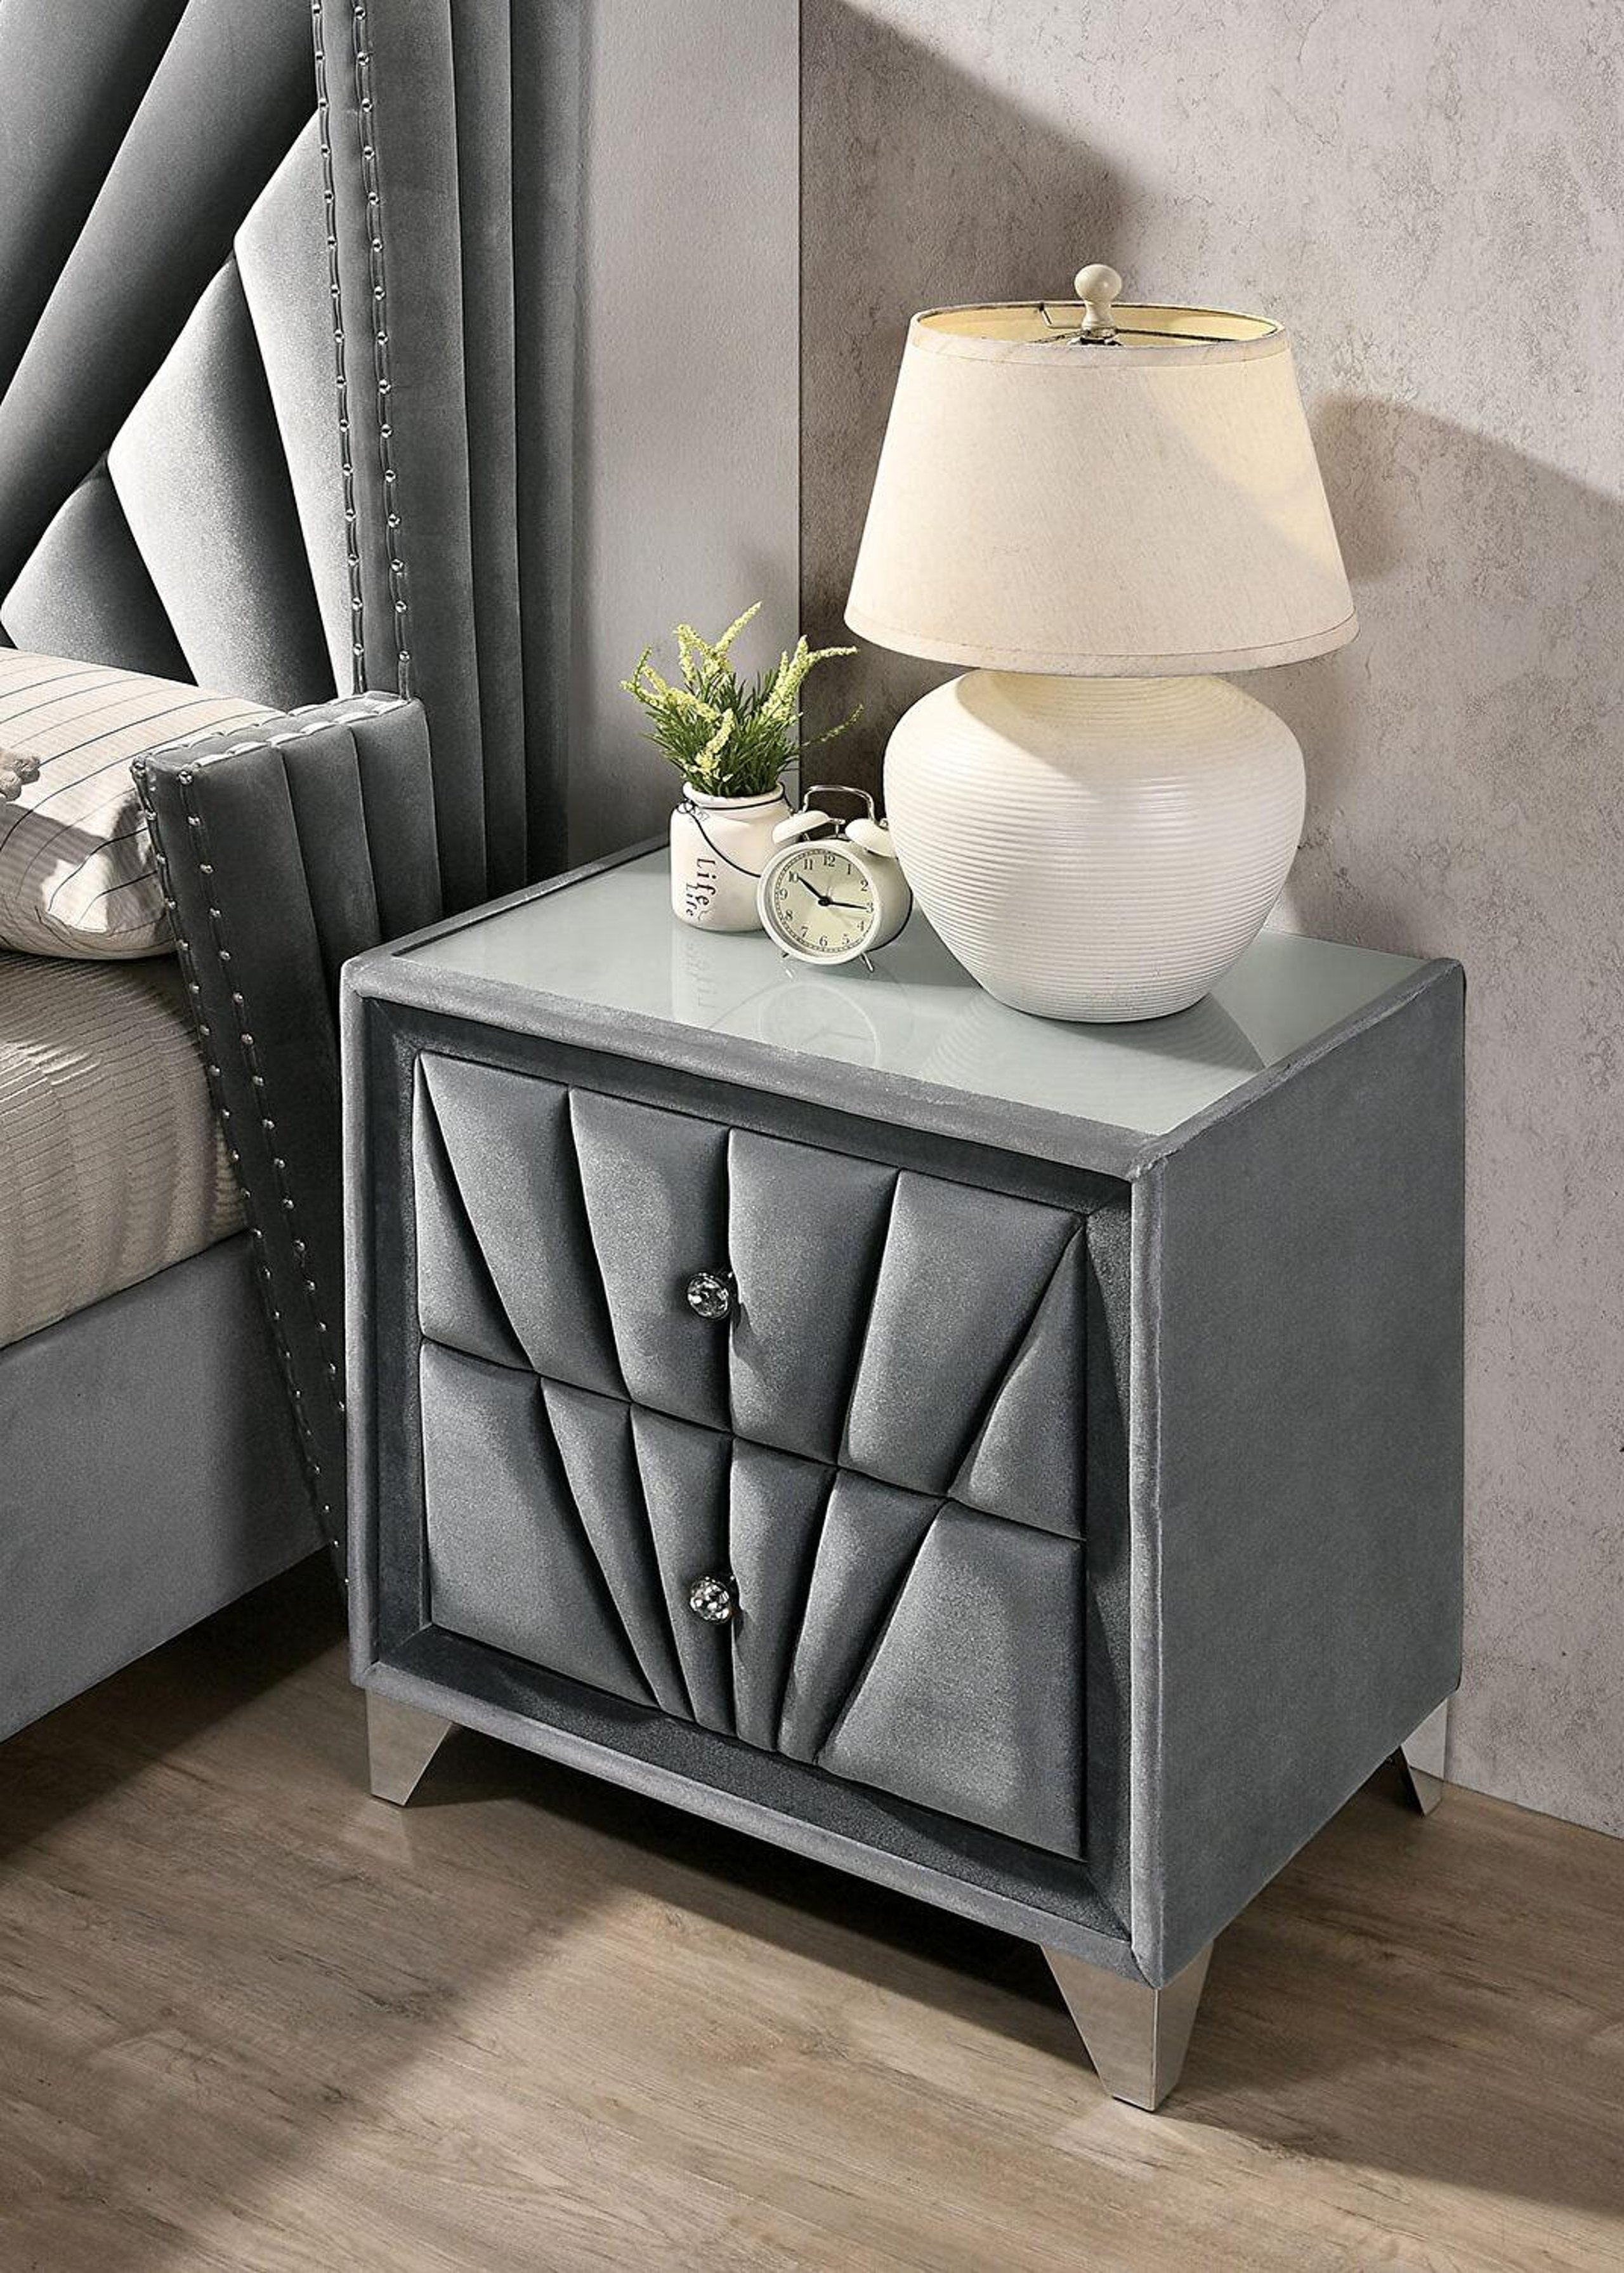 Buy Furniture of America CM7164-EK-3PC Carissa King Bedroom Set 3 Pcs ...